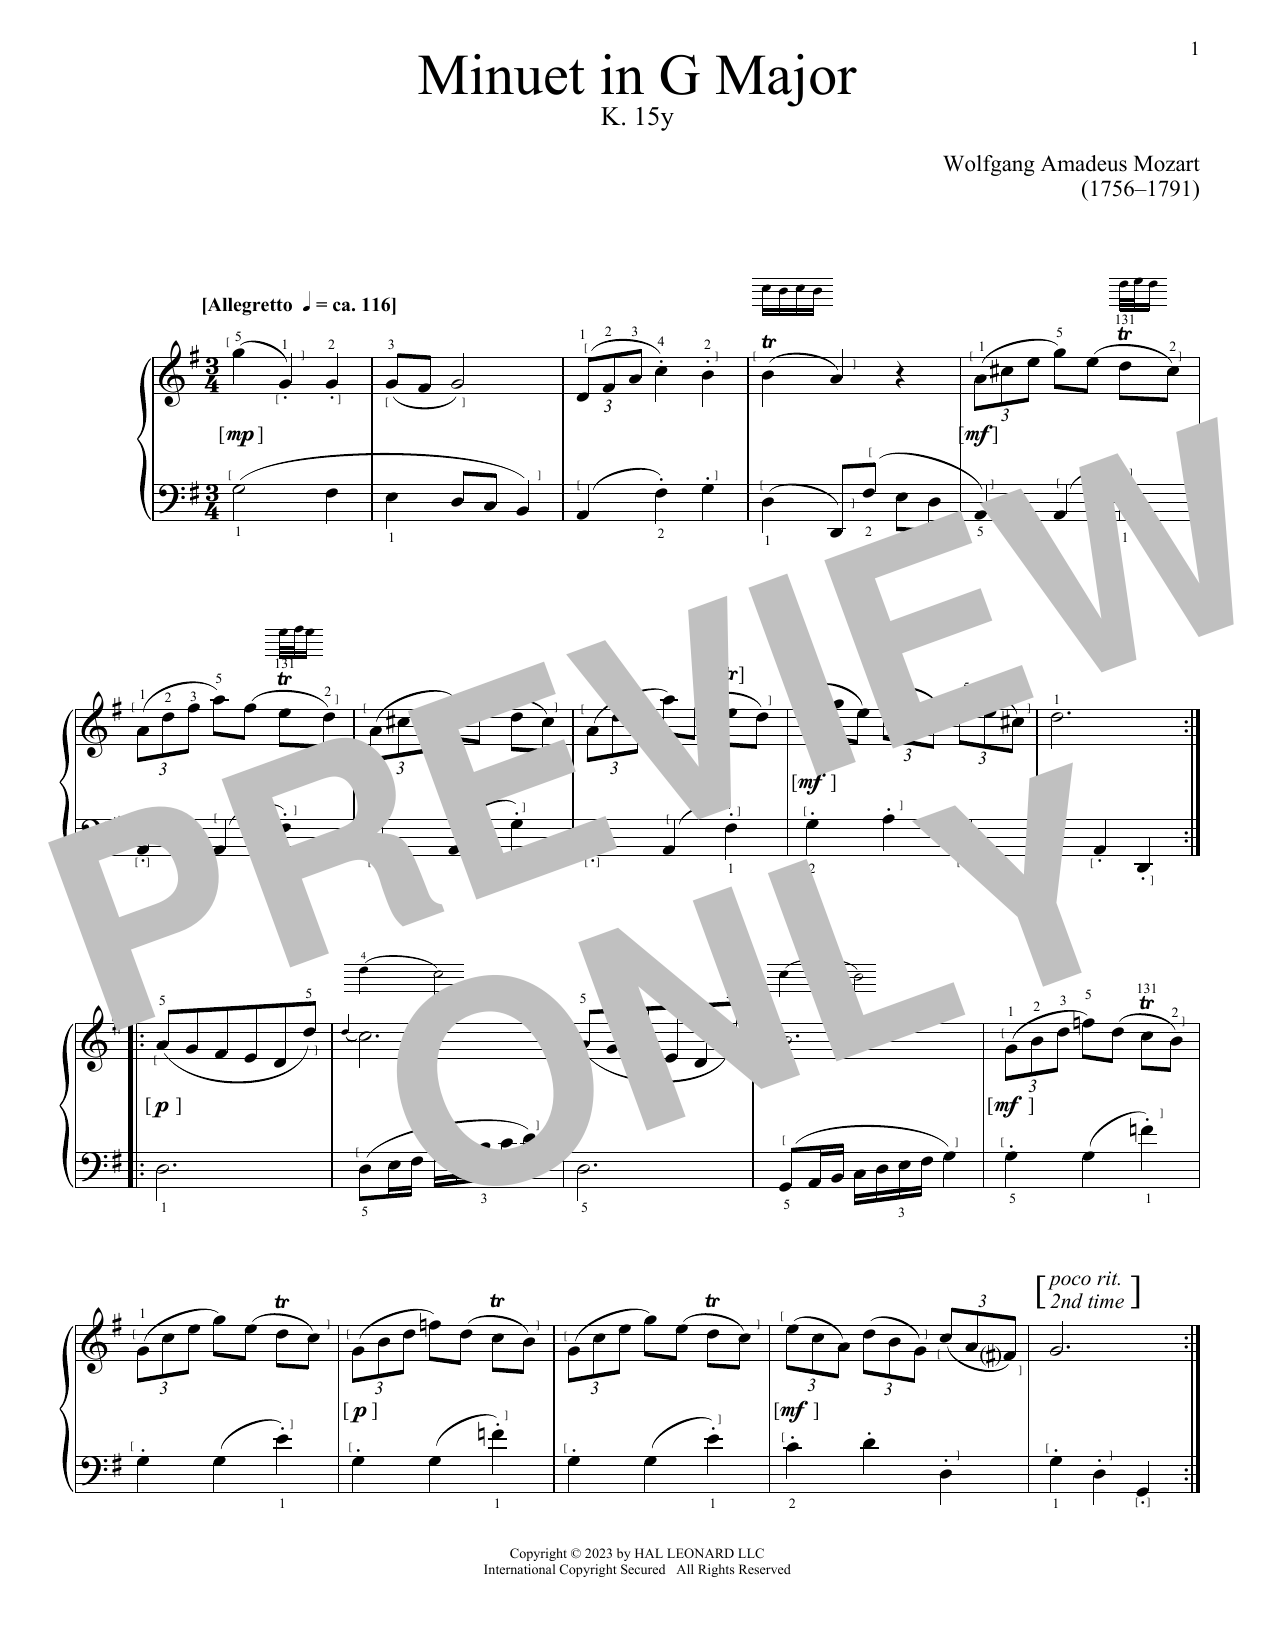 Download Wolfgang Amadeus Mozart Minuet in G Major, K. 15y Sheet Music